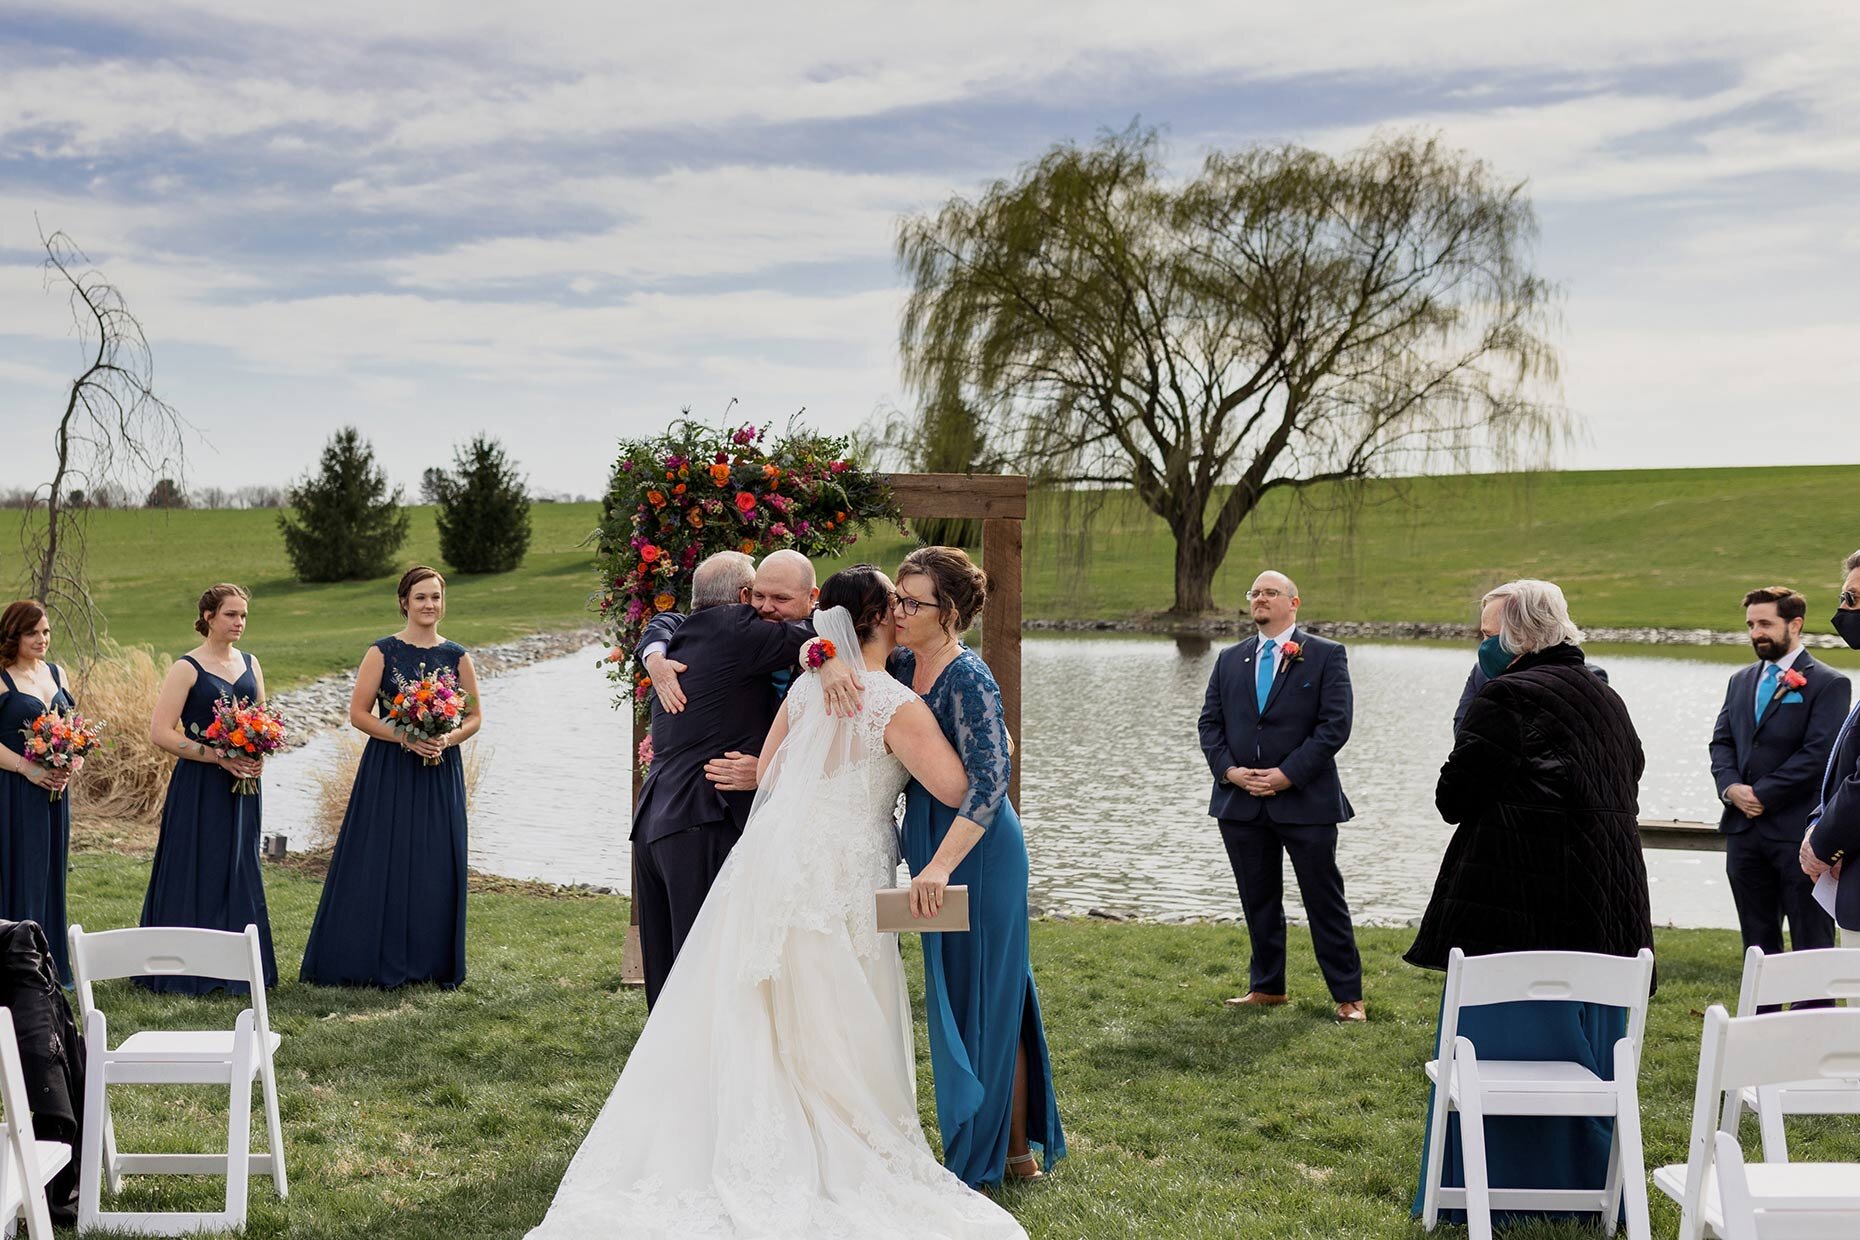 Giving away the bride at Lakefield Weddings, Manheim, PA